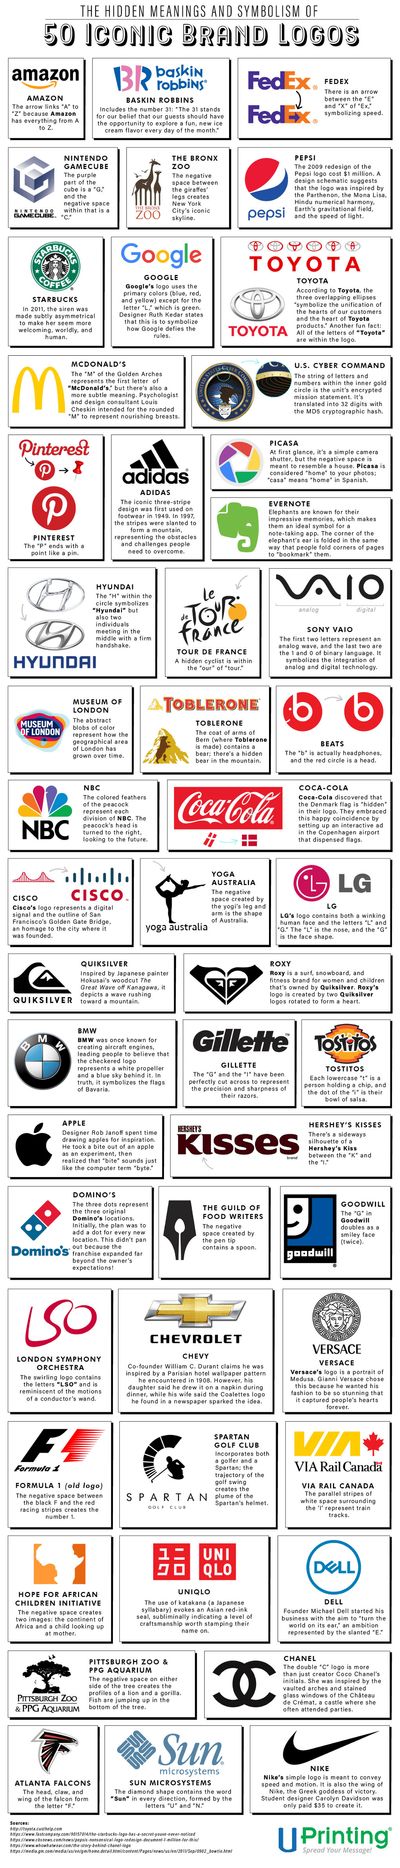 Infographic reveals 50 huge logo design secrets | Creative Bloq